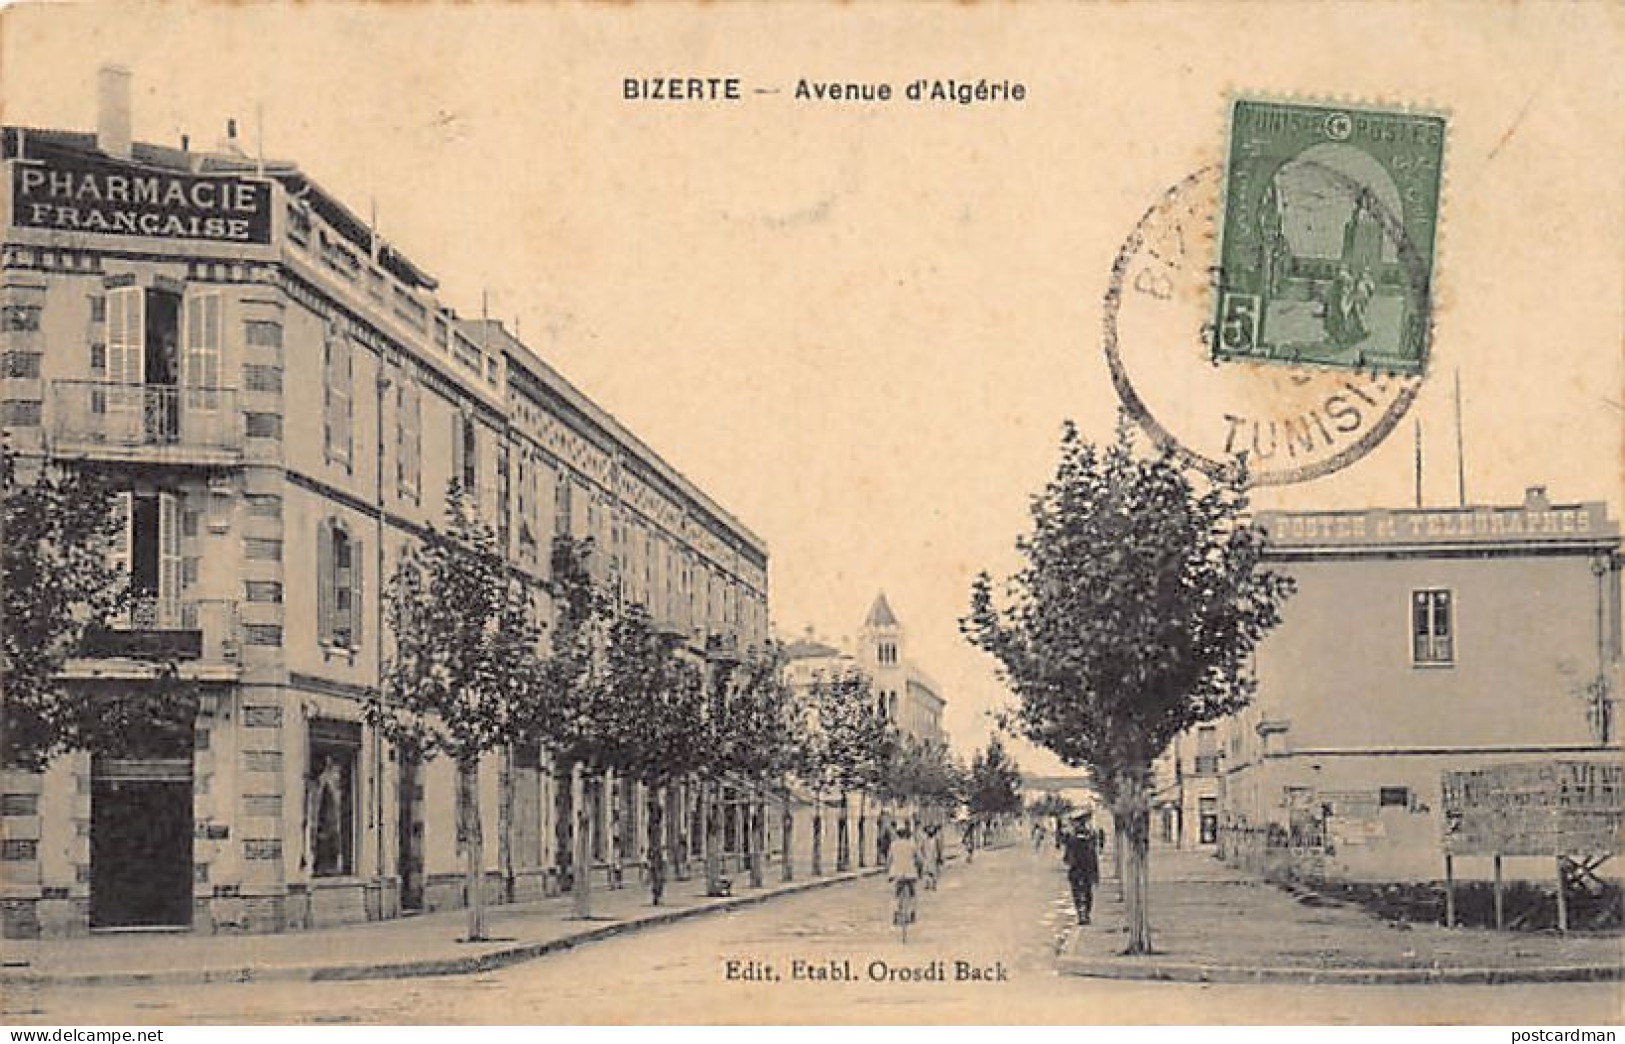 Tunisie - BIZERTE - Avenue D'Algérie - Pharmacie Française - Ed. Orosdi Back  - Tunisia